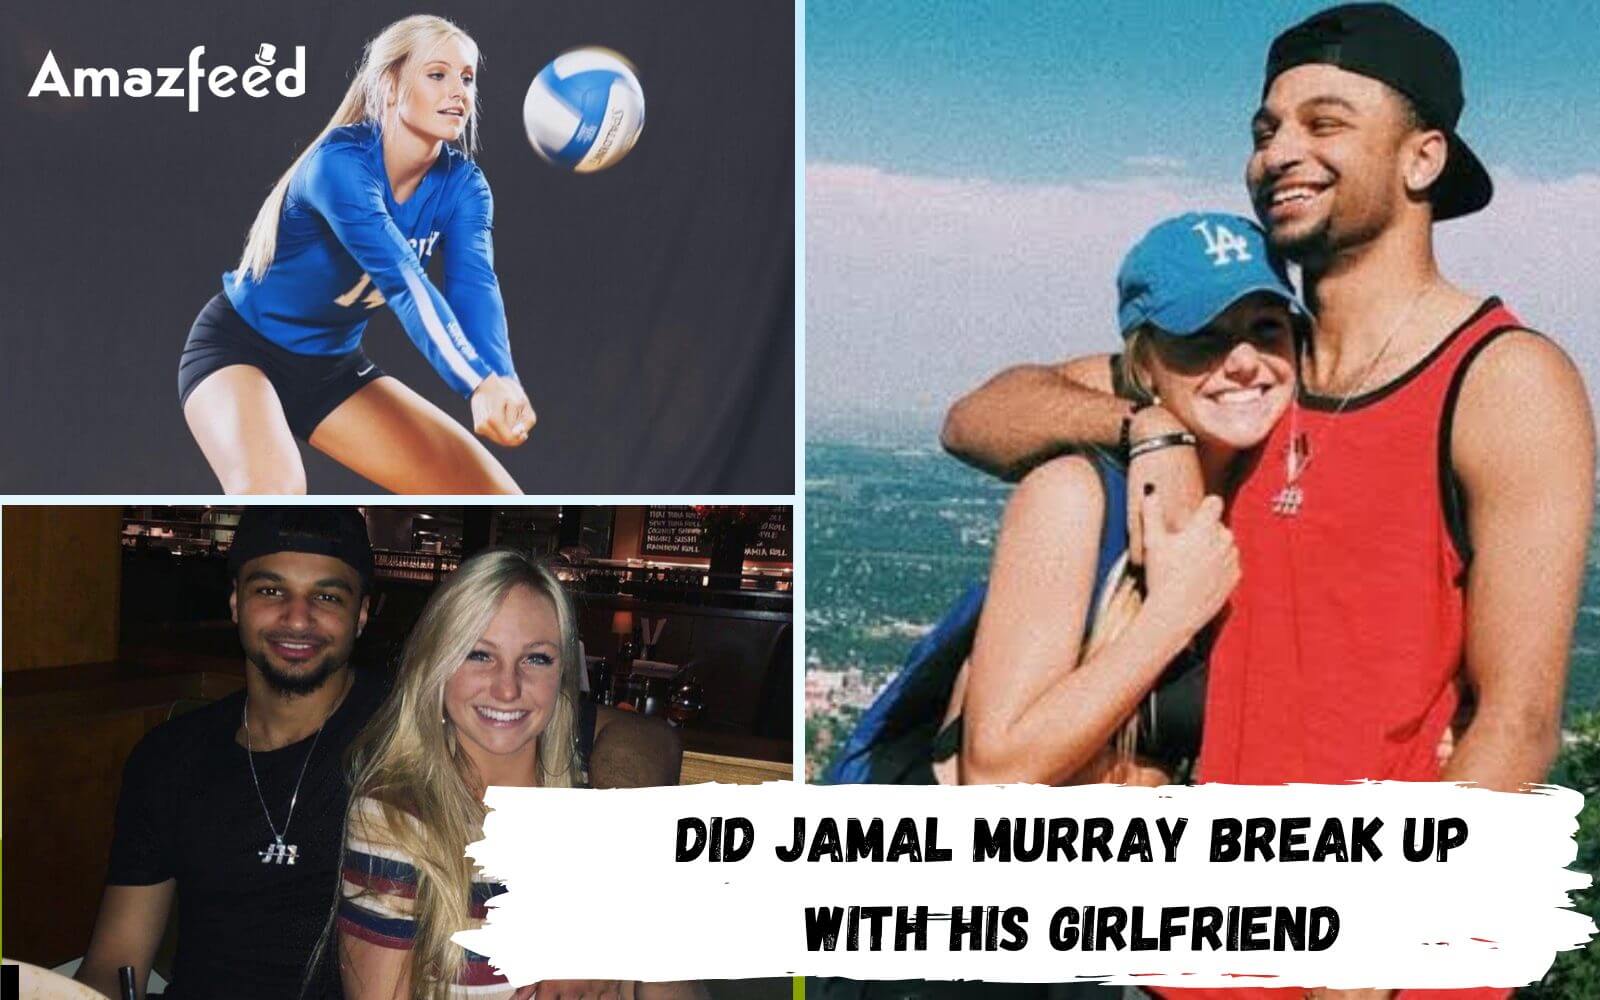 Jamal Murray biography: Age, height, parents, girlfriend, stats 